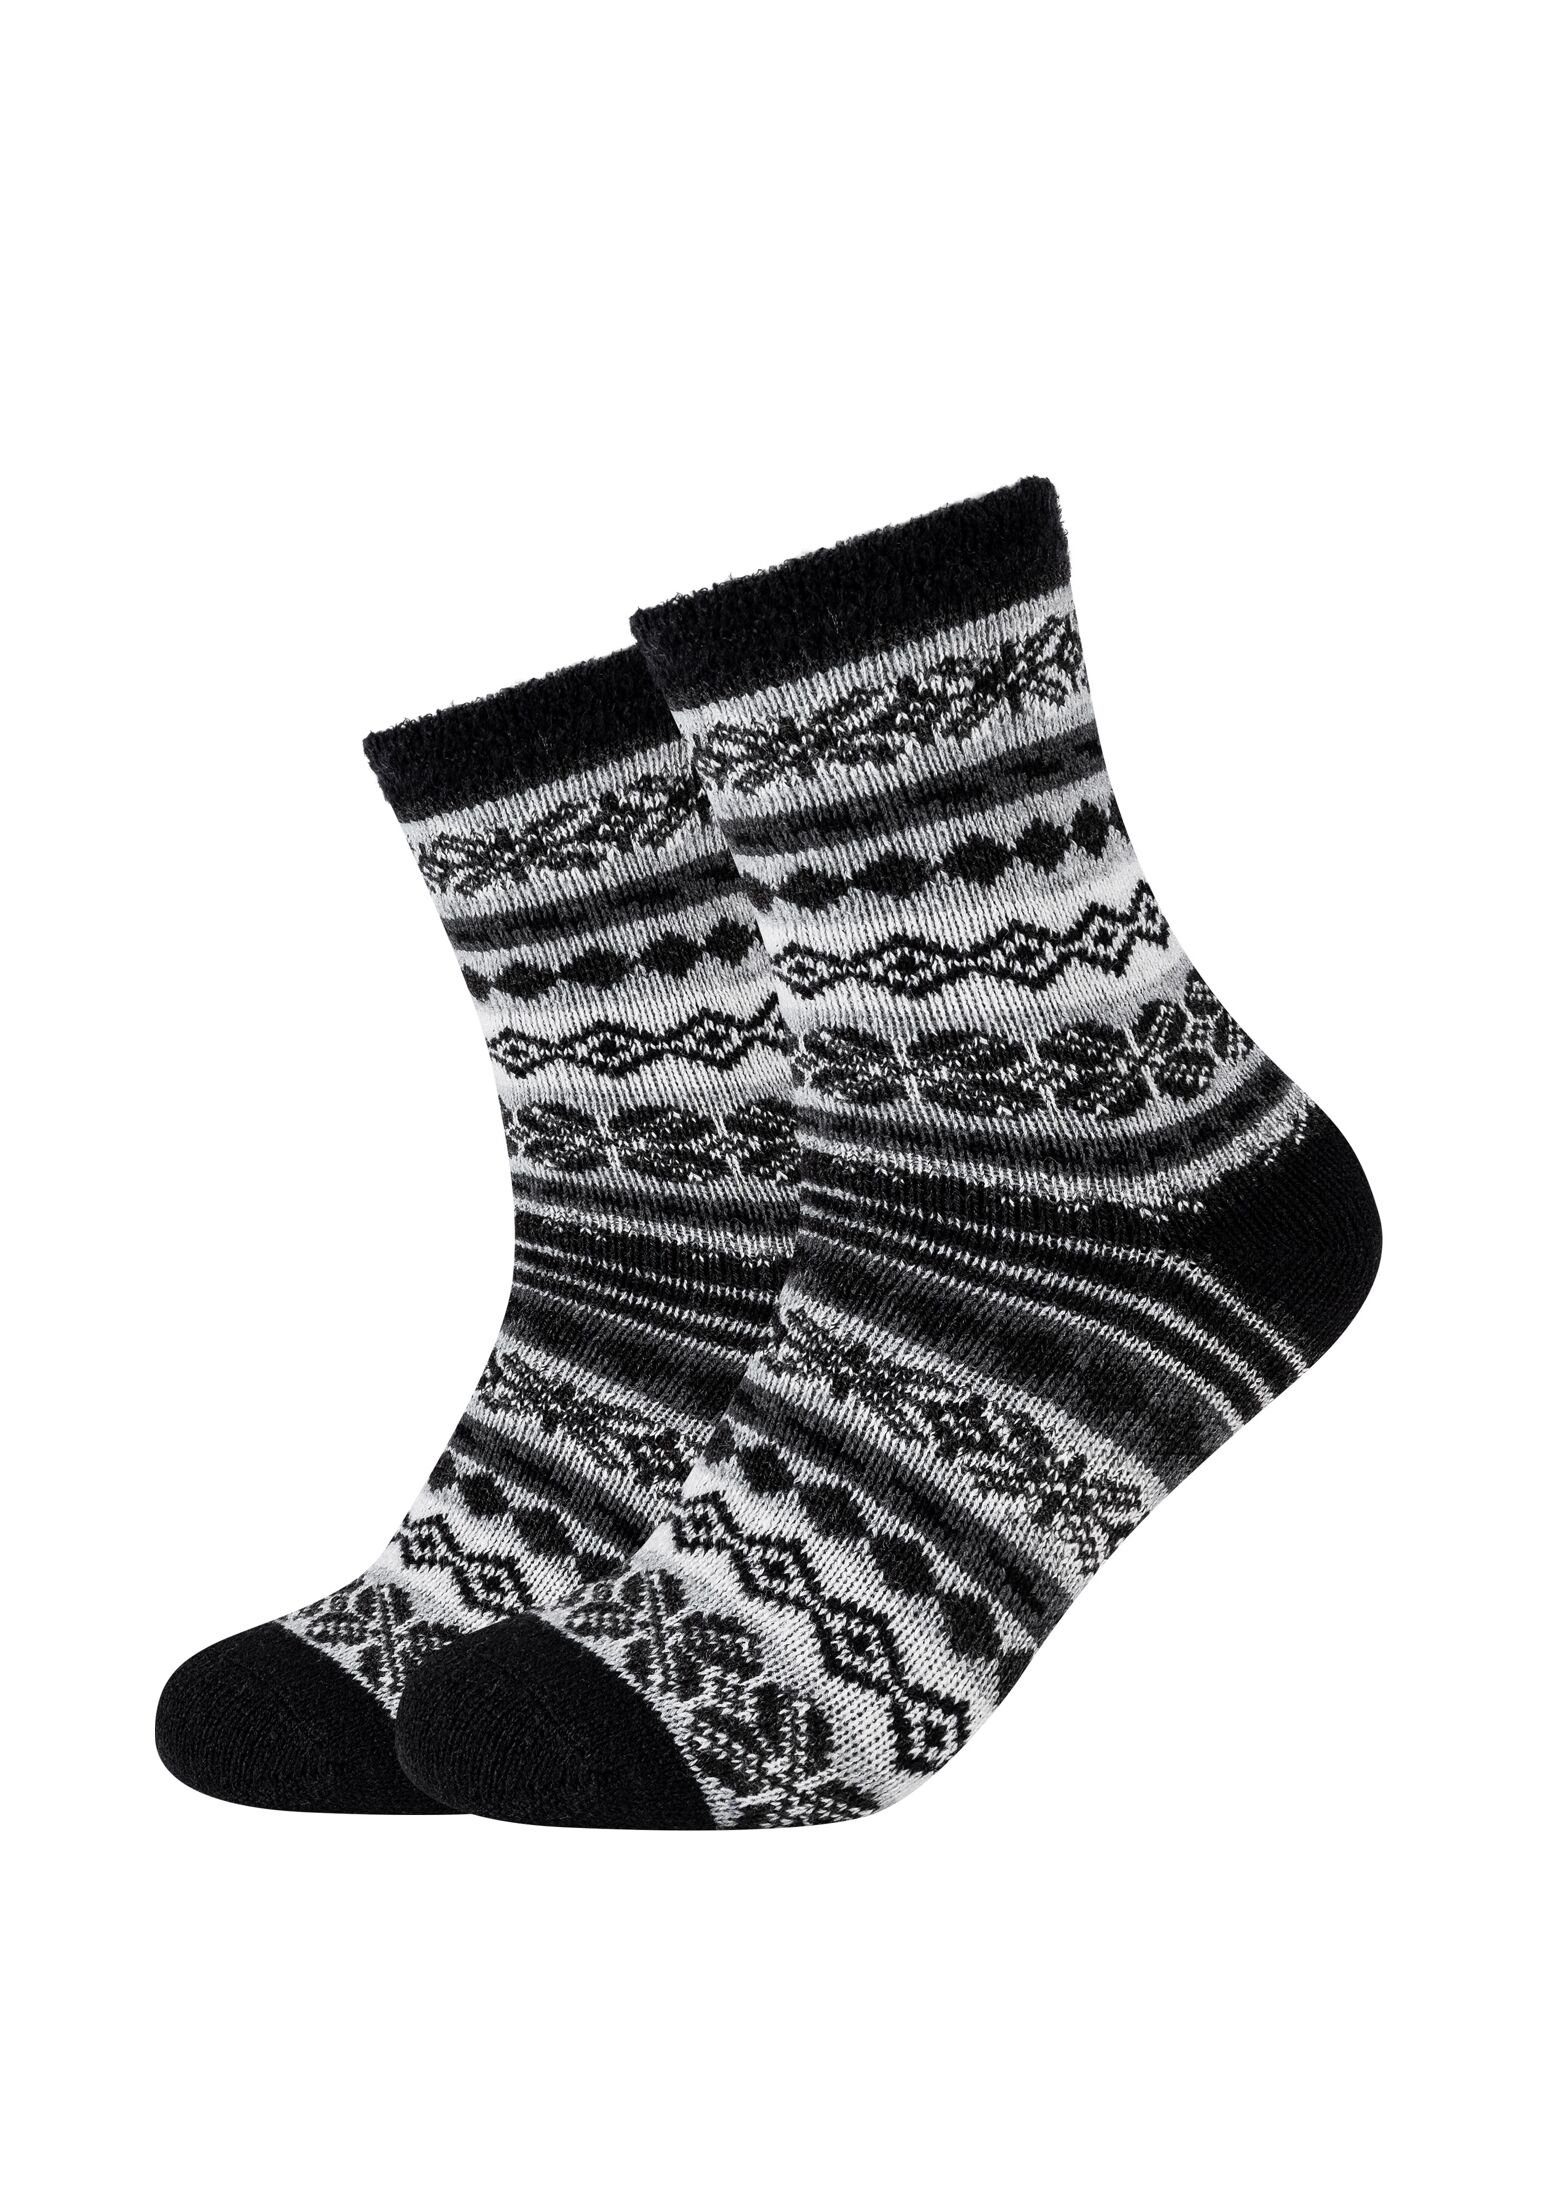 Camano Socken Socken Cosy Norweger Kuschelsocken Flauschig Warm Damen black